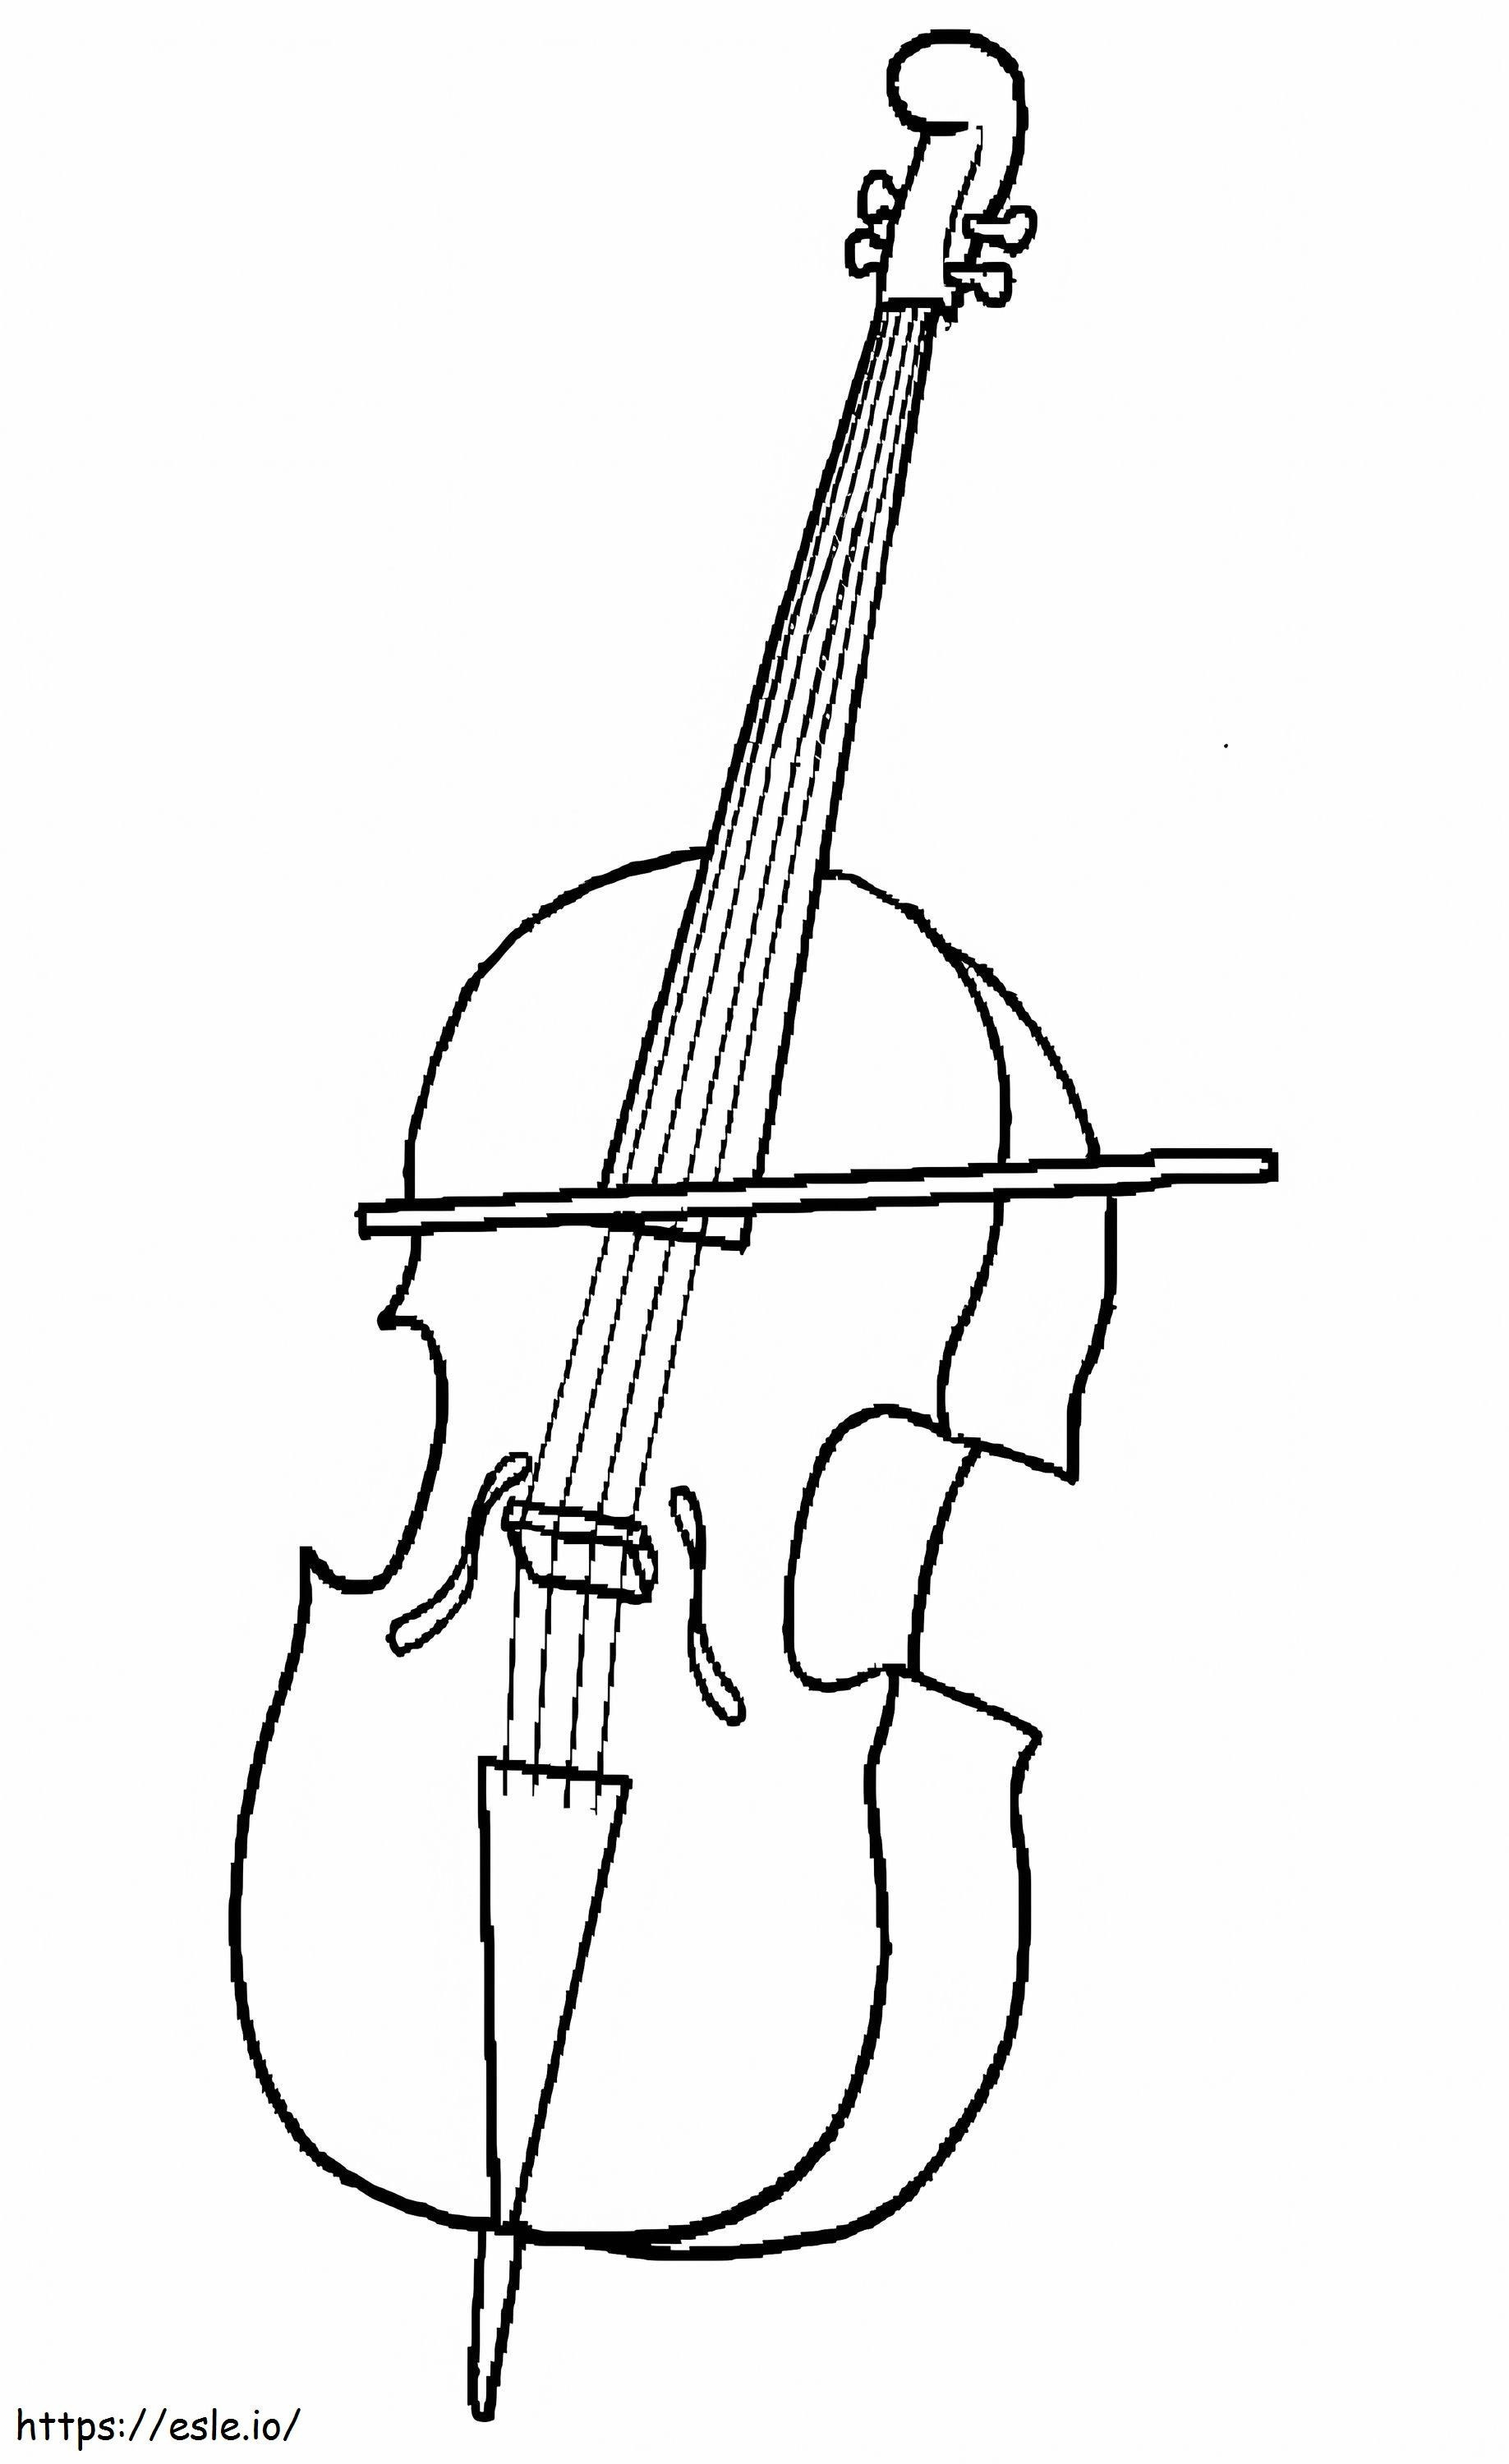 Free Cello coloring page